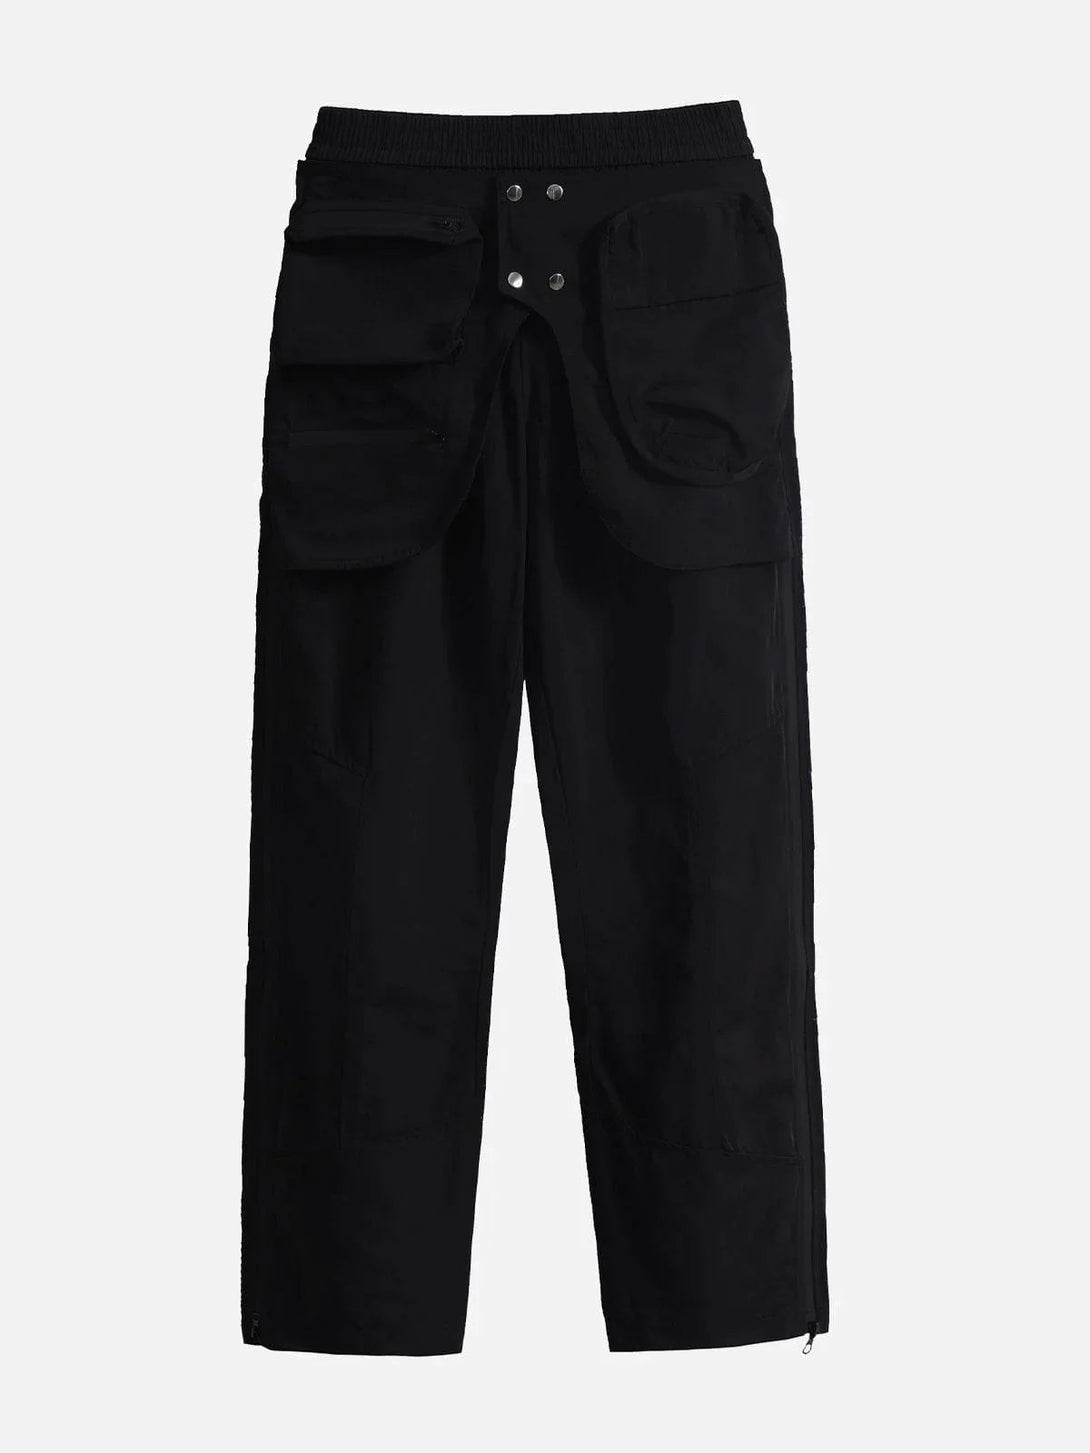 Majesda® - Fake Two Patchwork Pants outfit ideas streetwear fashion